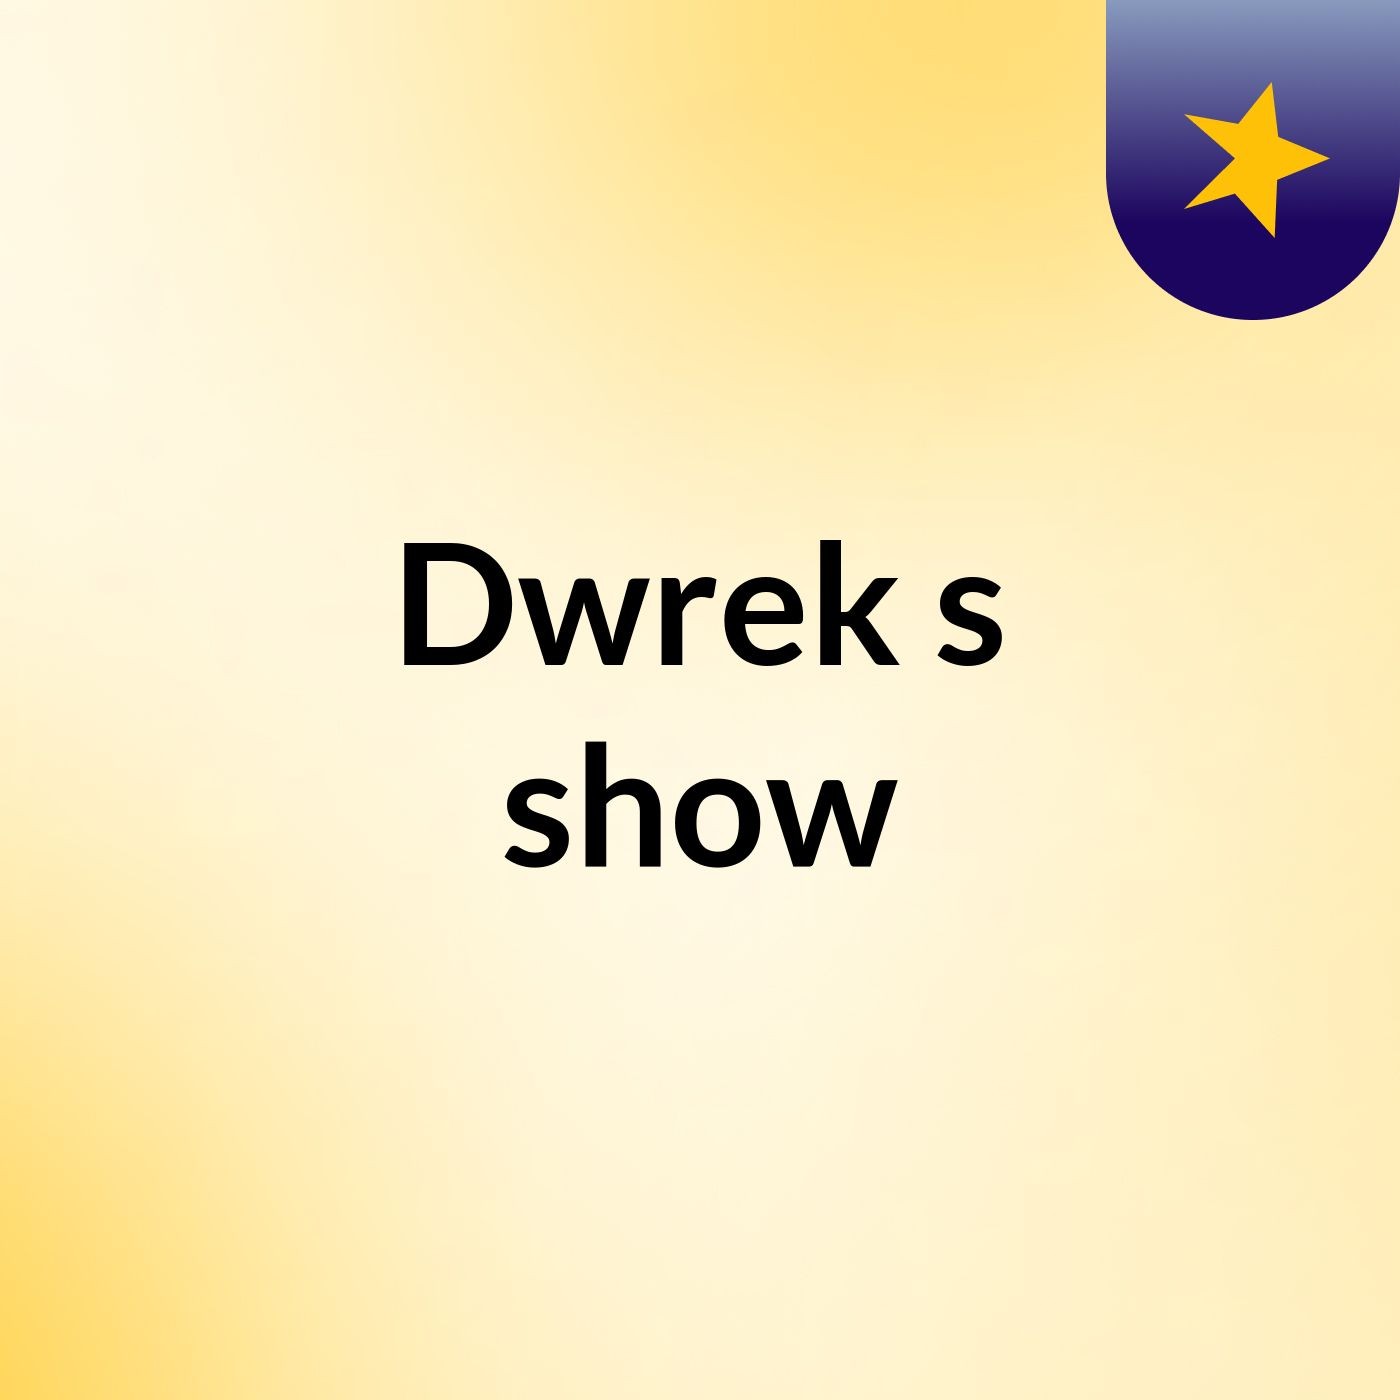 Dwrek's show